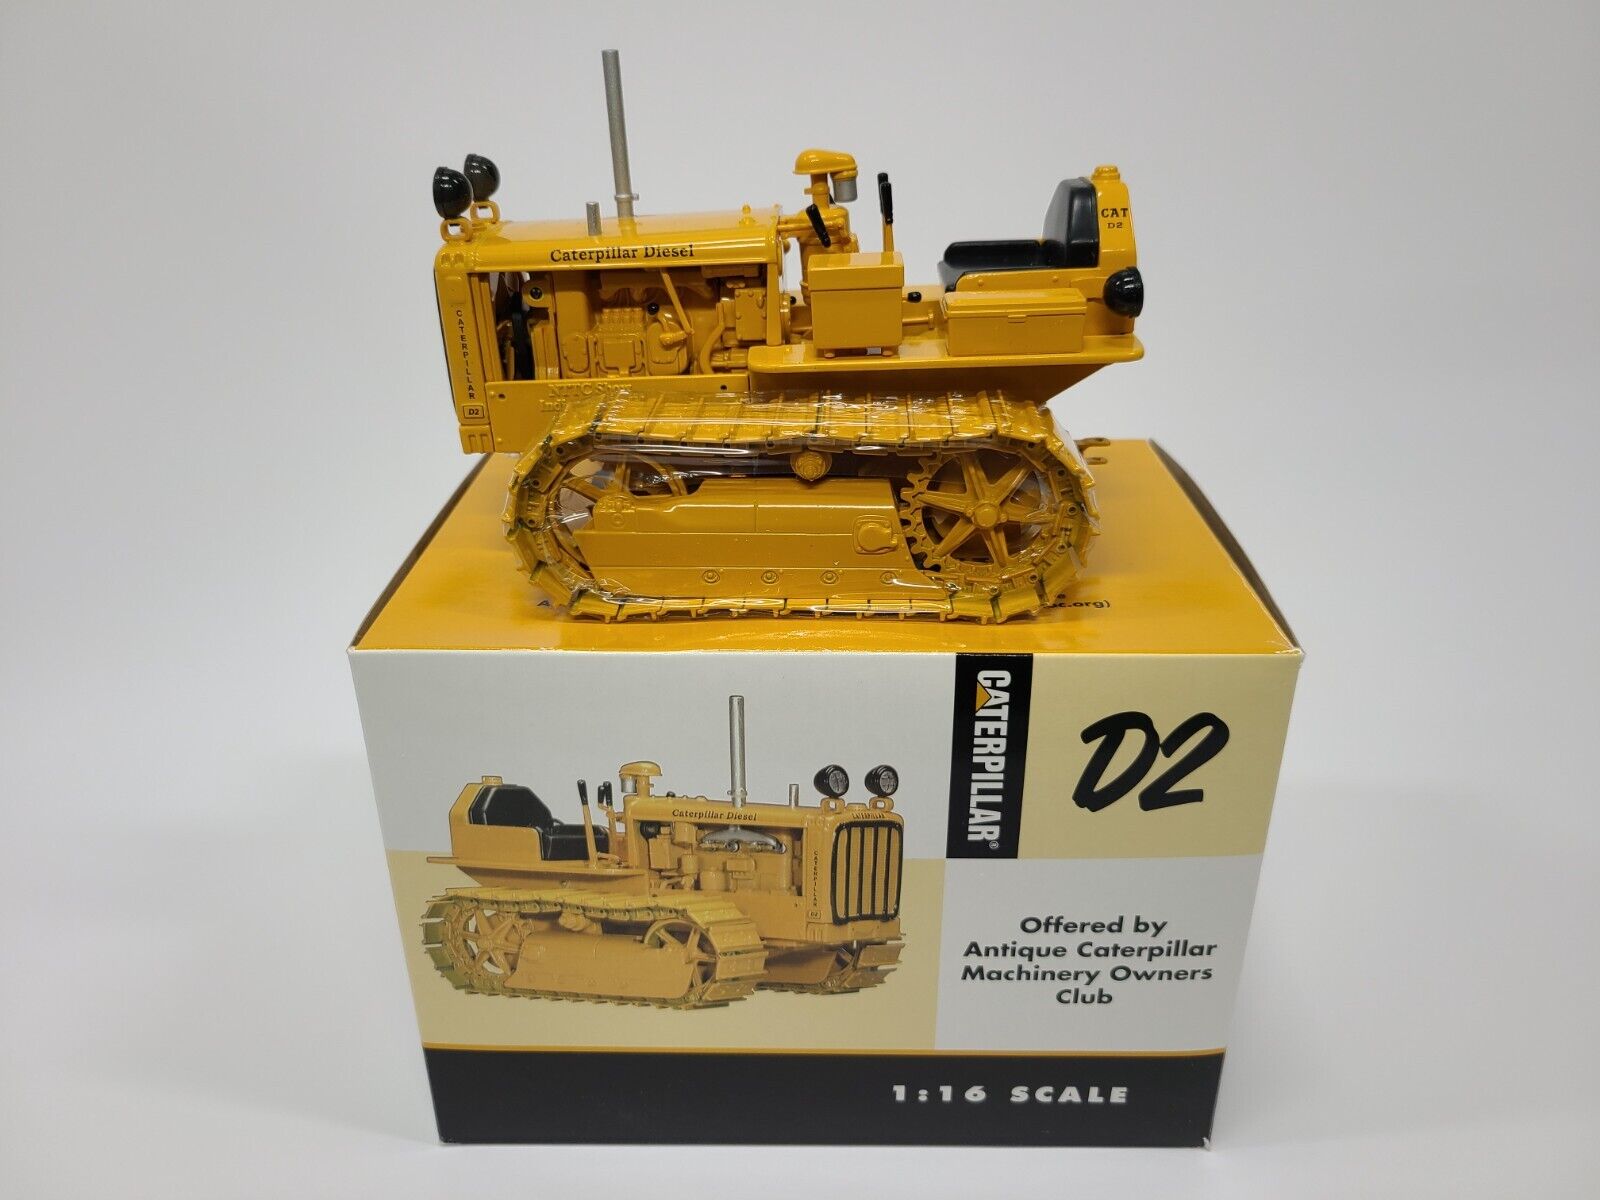 Caterpillar Cat D2 Crawler Tractor 2003 NTTC - SpecCast 1:16 Scale #CUST773 New